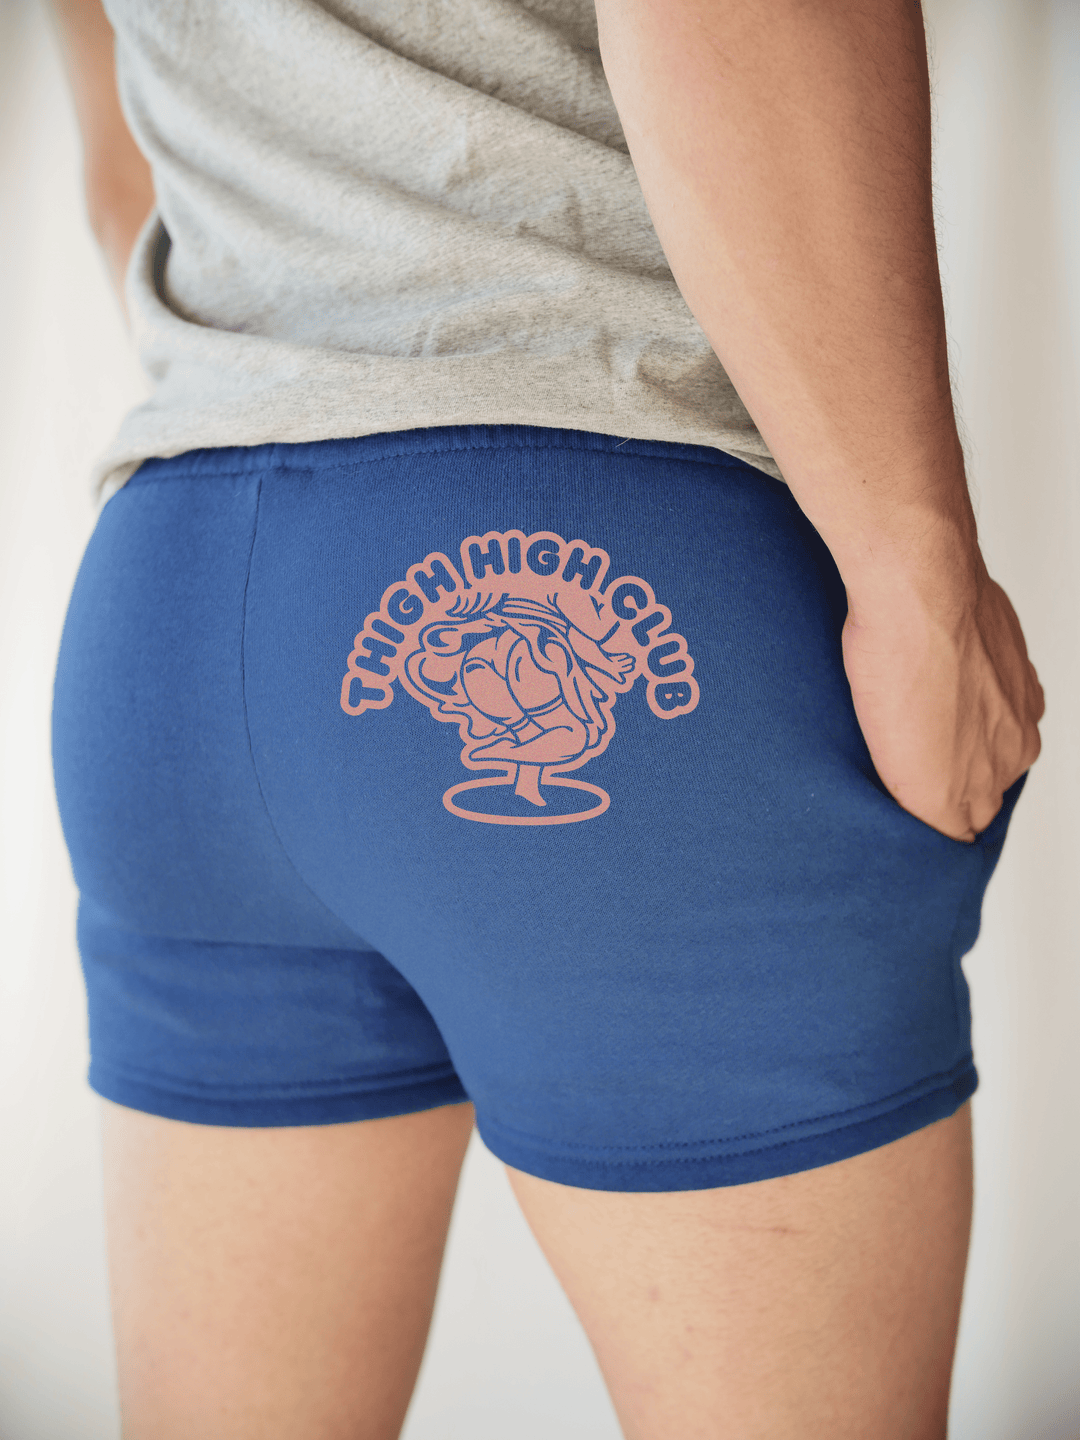 PixelThat Punderwear Shorts Royal Blue / S / Back Thigh High Club Men's Gym Shorts